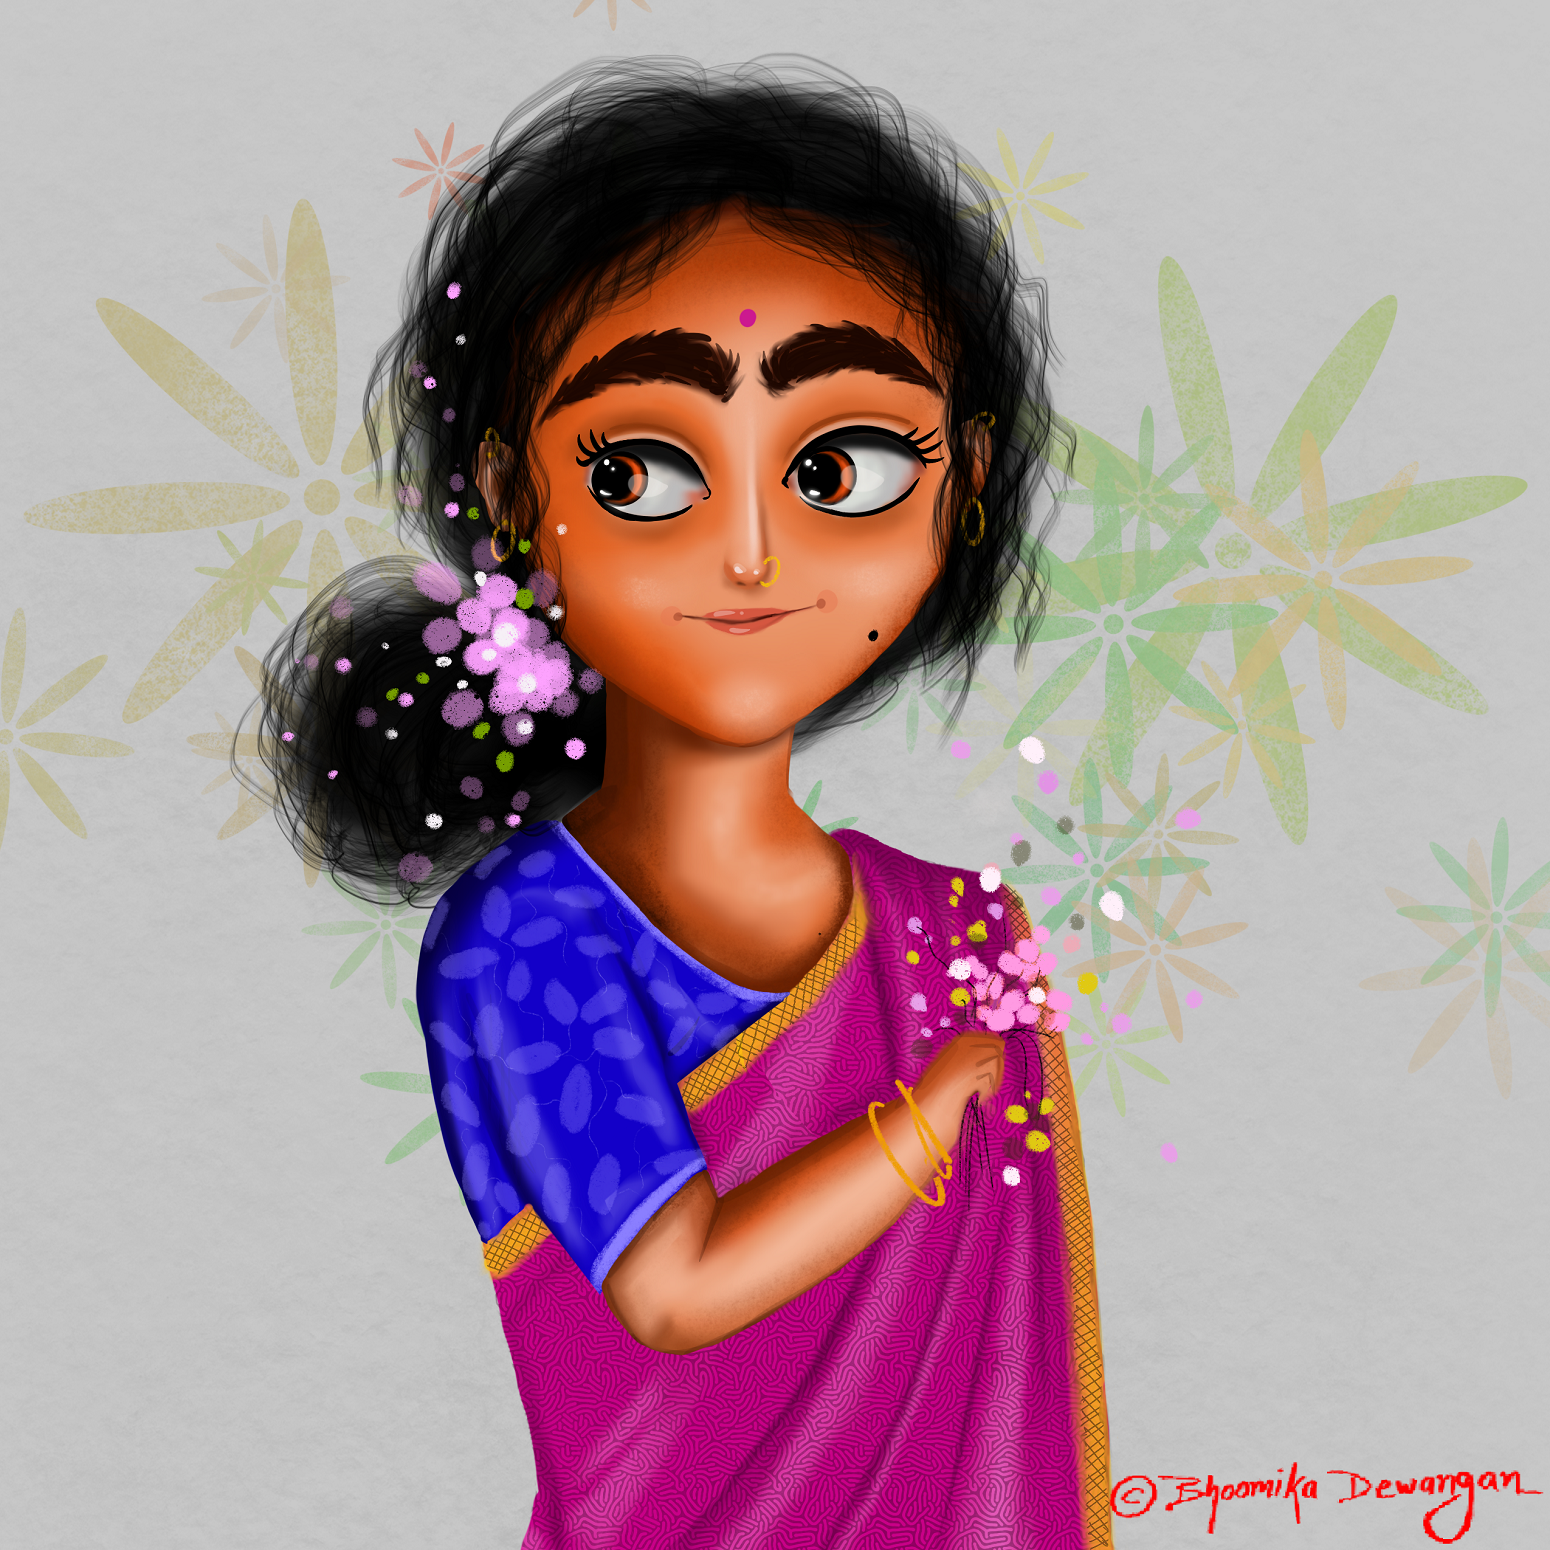 Woman-in-Saree-illustration-bhoomisart-digital-art